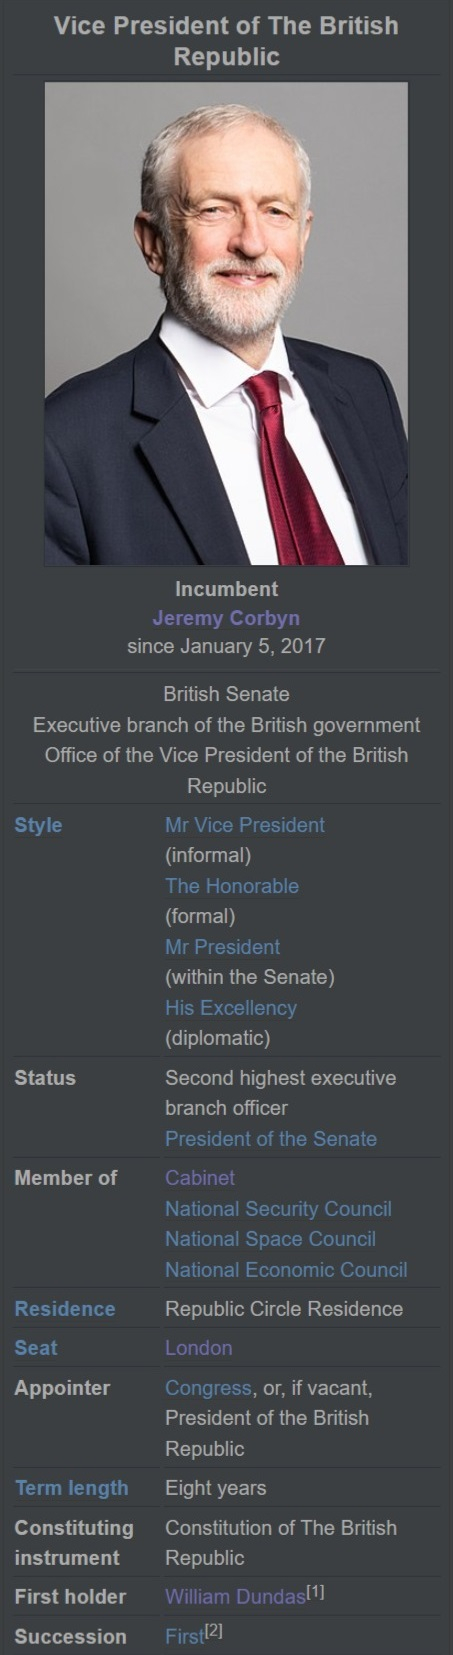 Vice President of The British Republic.jpg